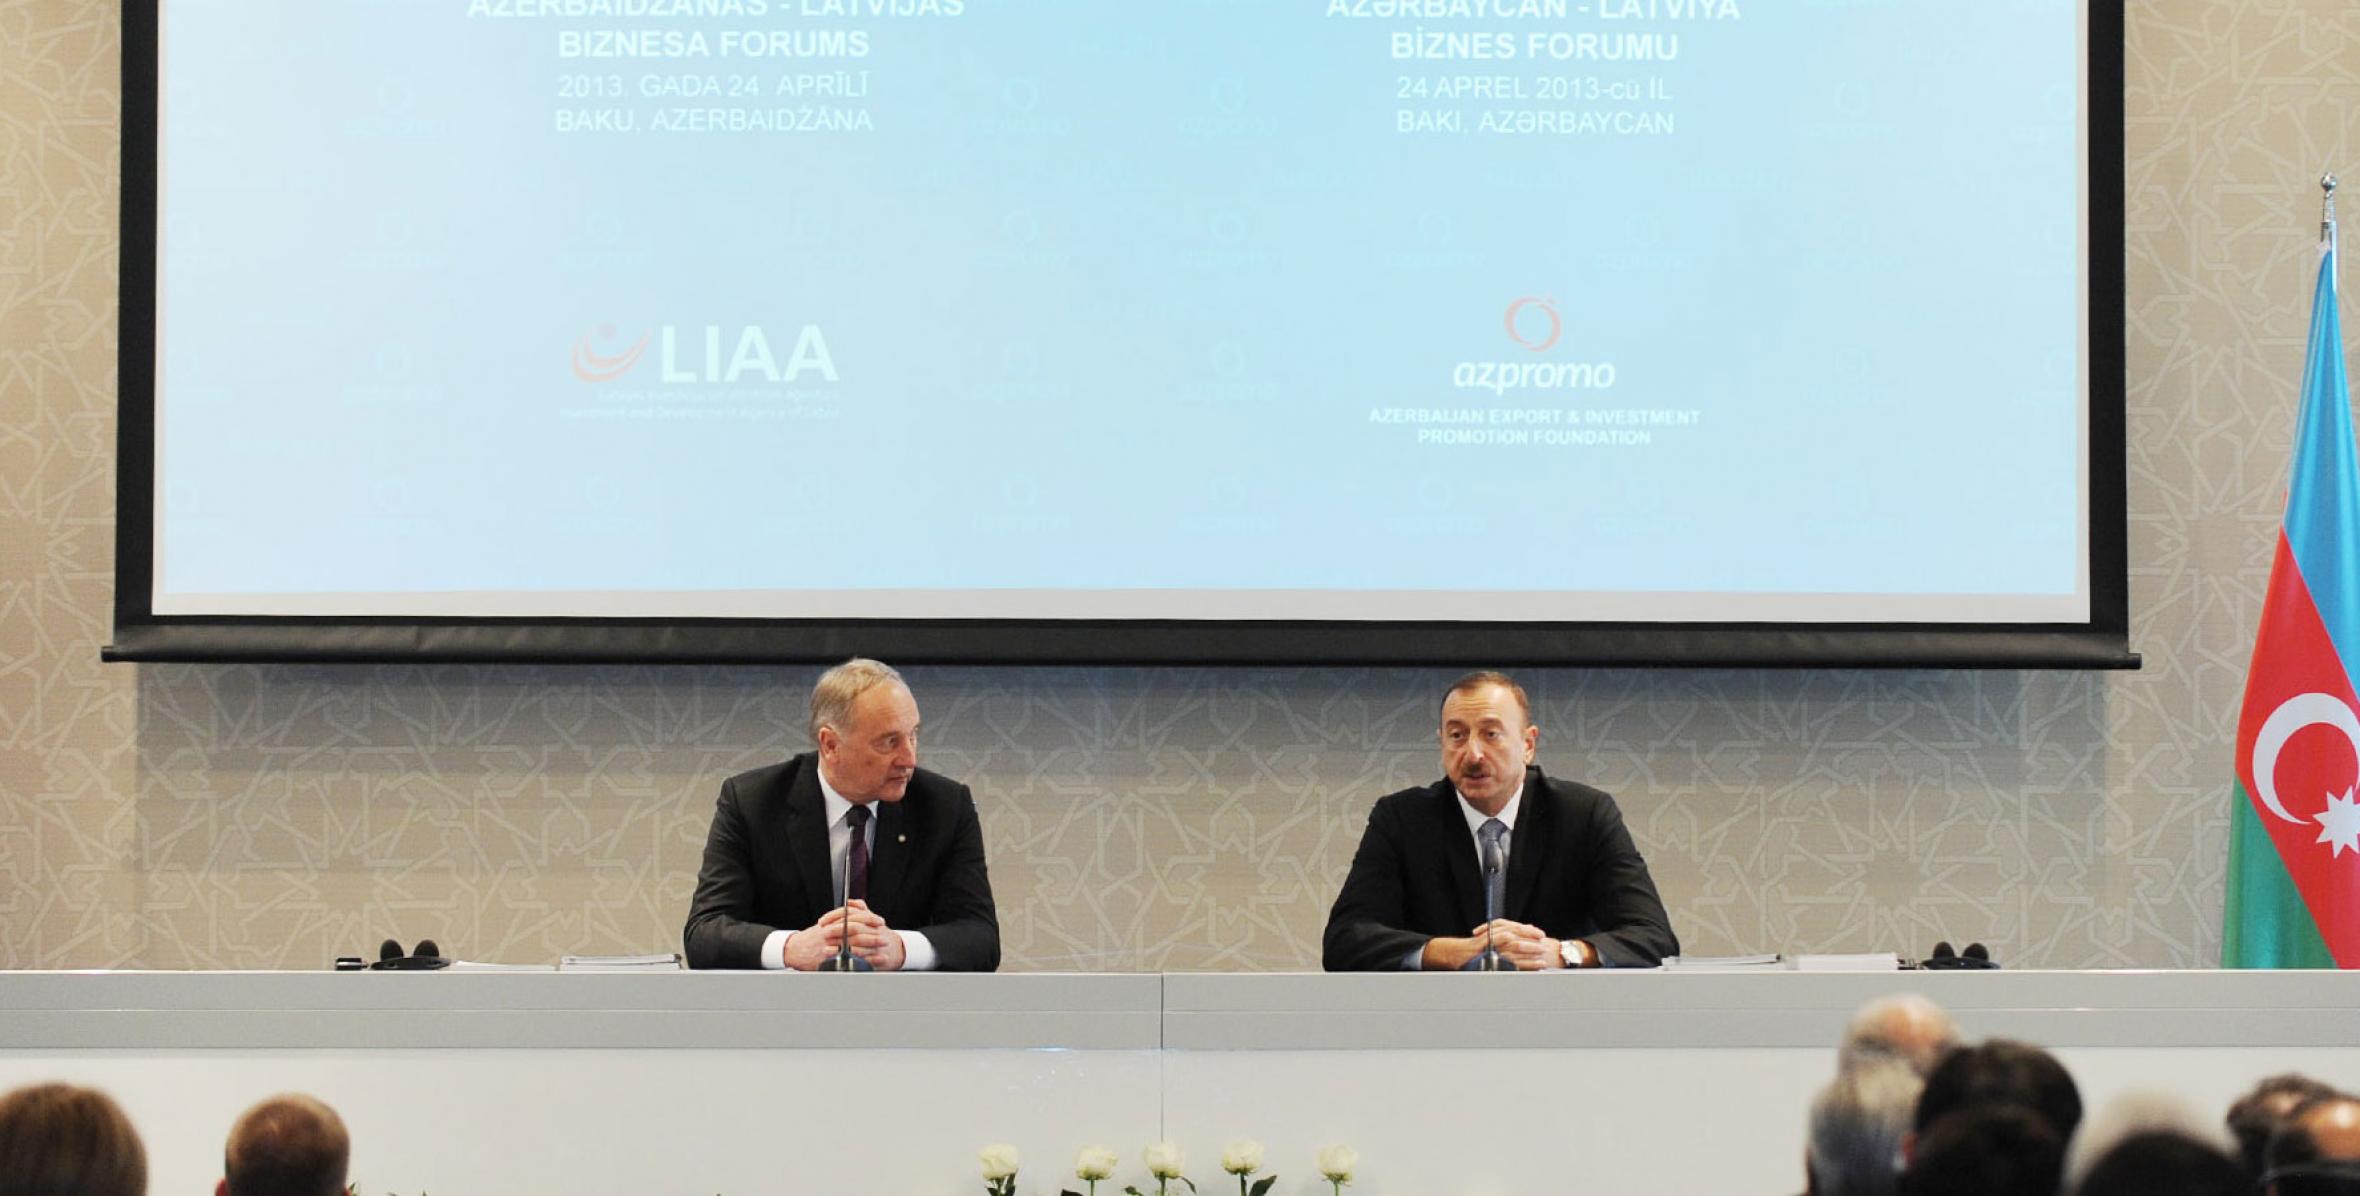 Ilham Aliyev and President of the Republic of Latvia Andris Berzins attended the Azerbaijani-Latvian business forum